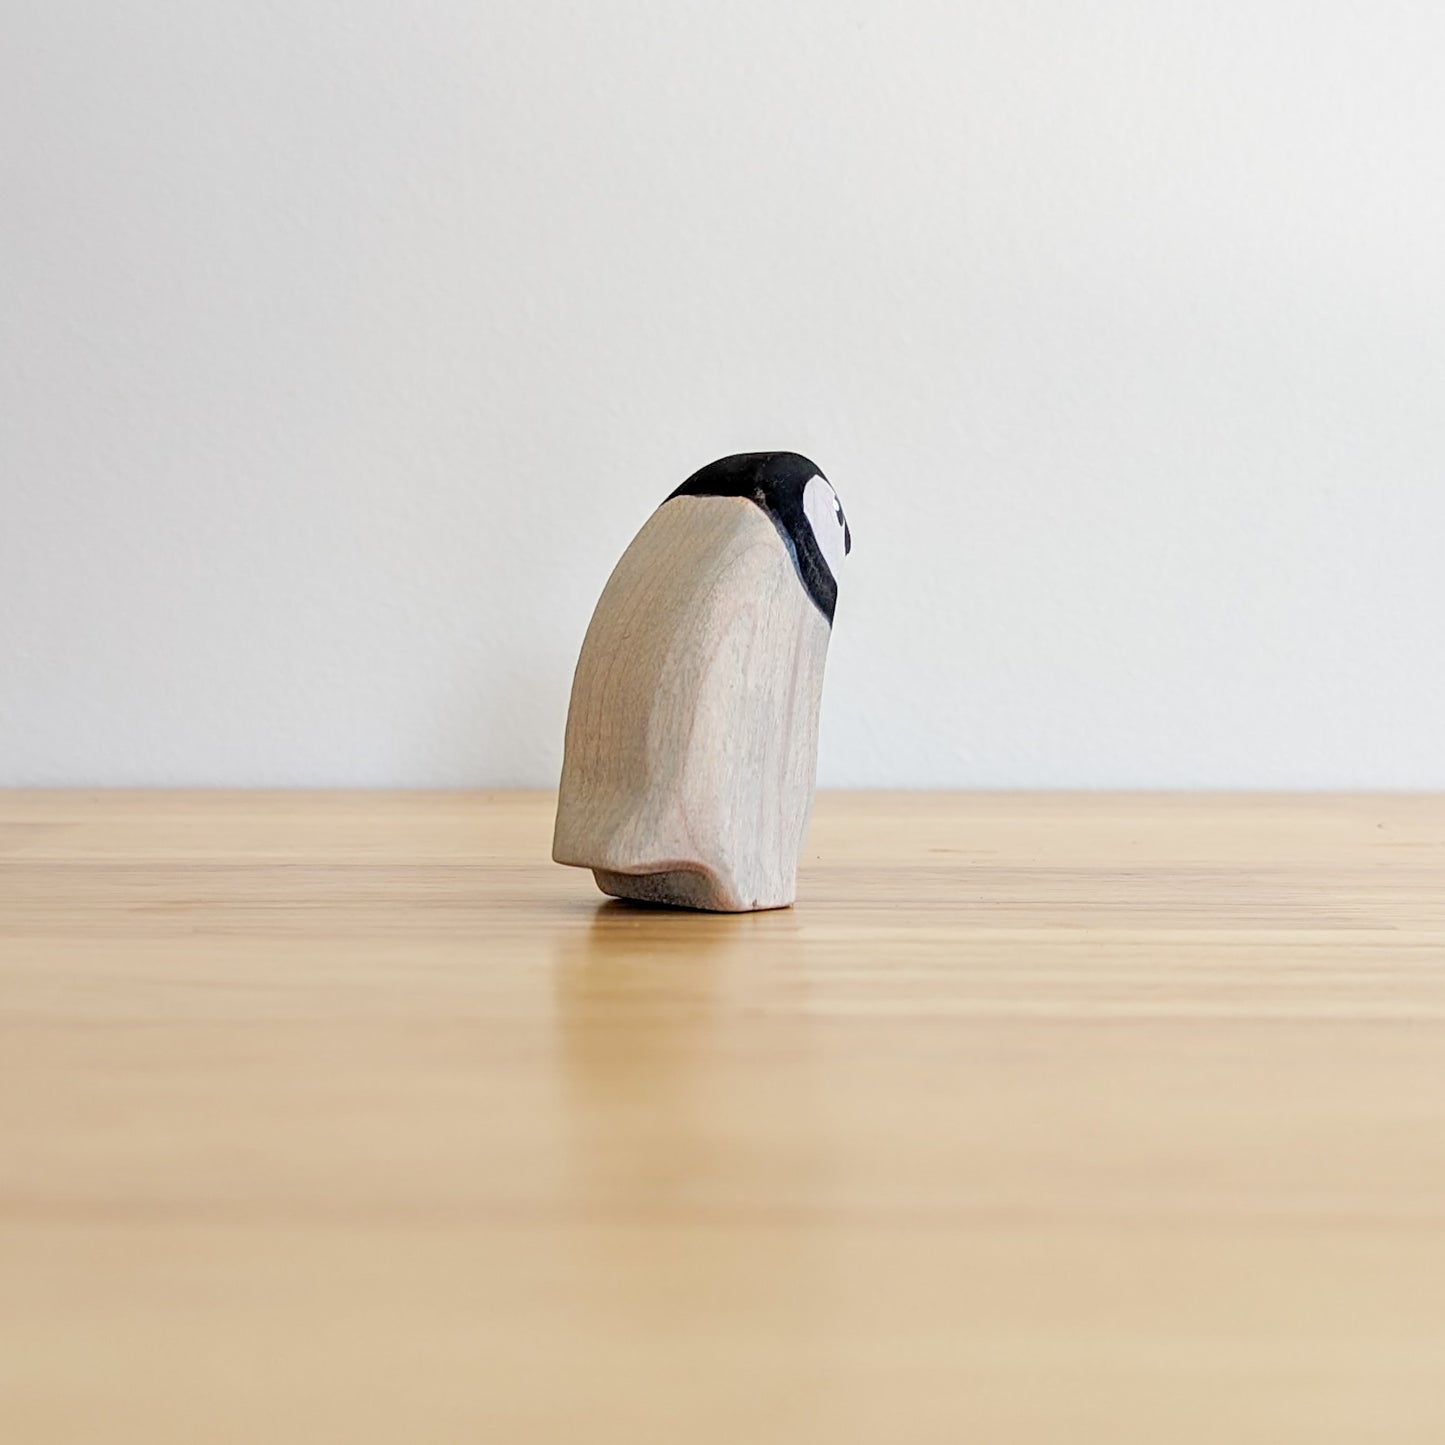 Emperor Penguin Chick ~ Wooden Toy